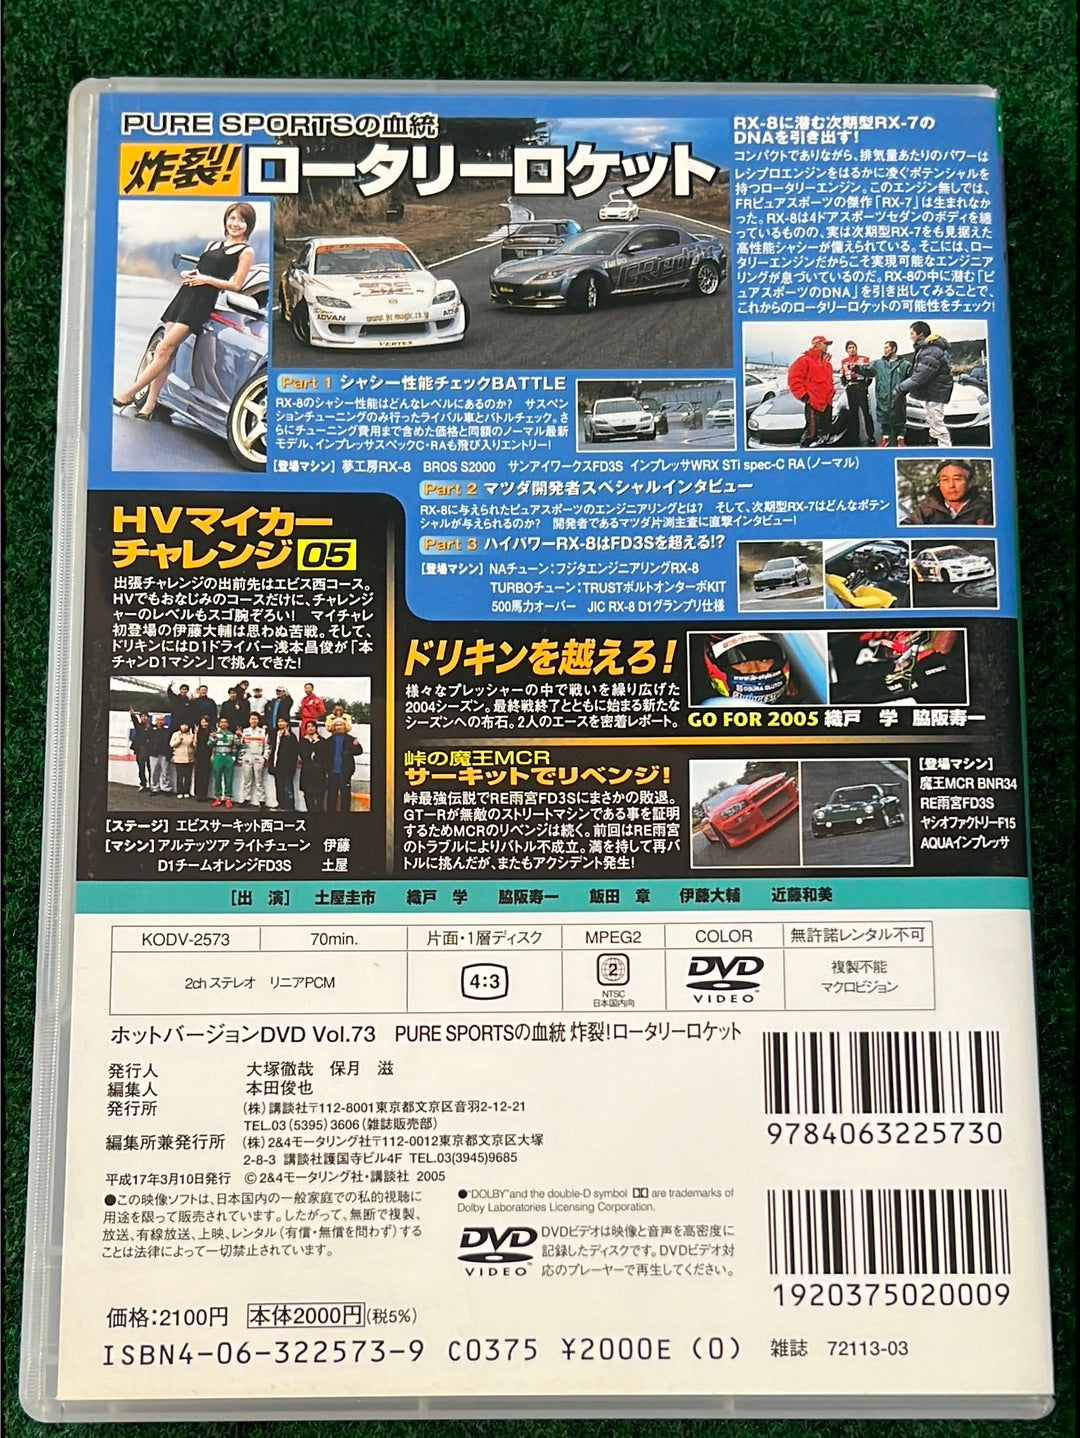 Hot Version DVD - Vol. 73